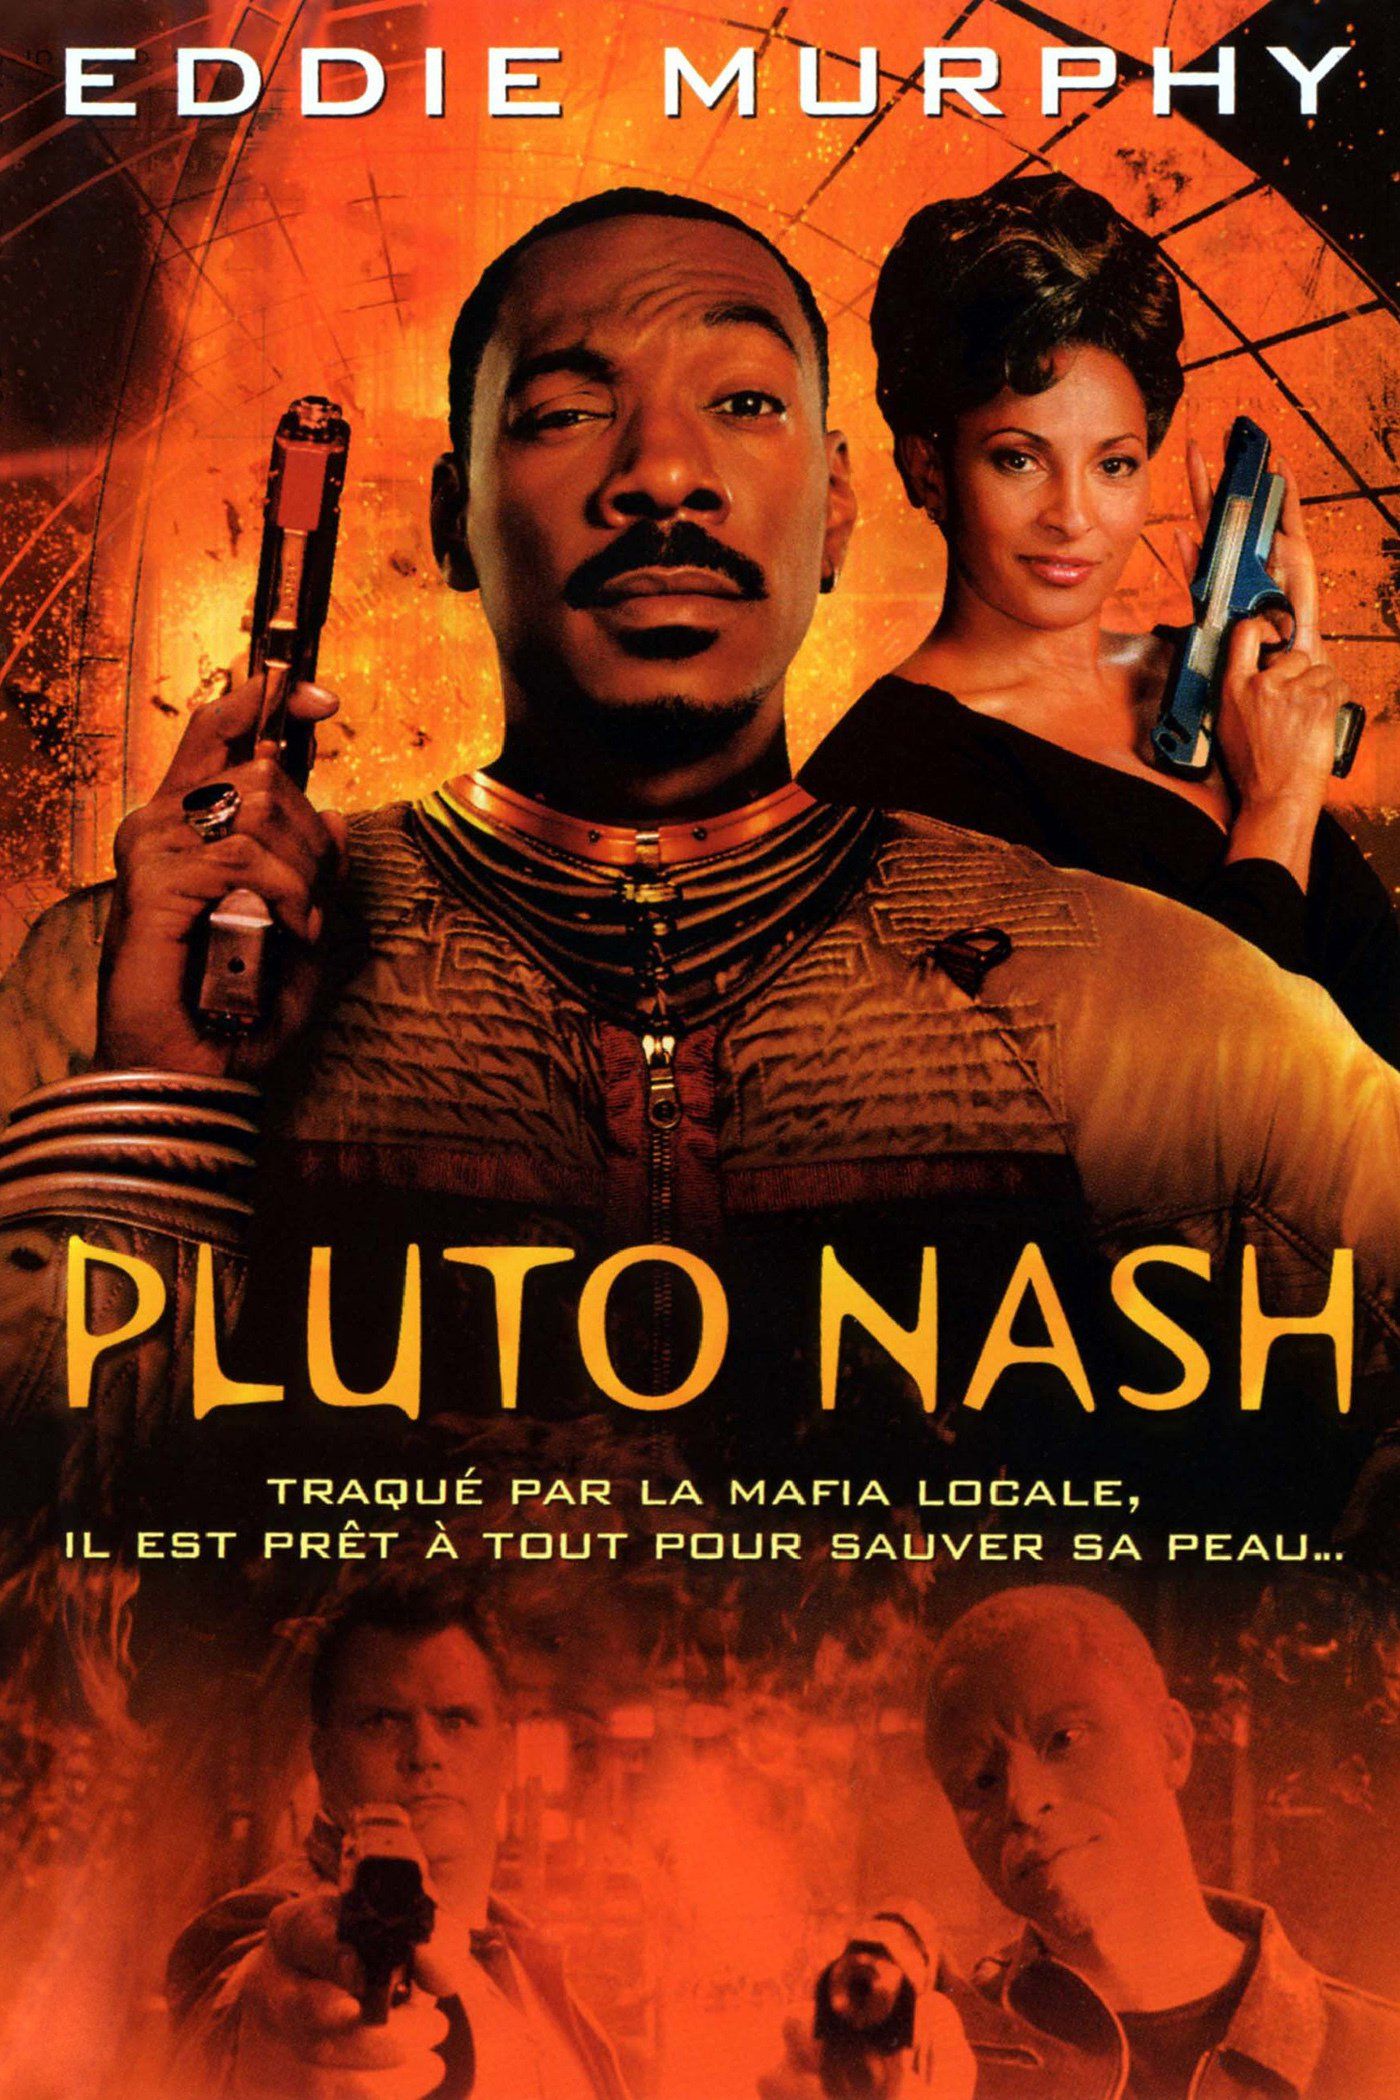 2002 The Adventures Of Pluto Nash